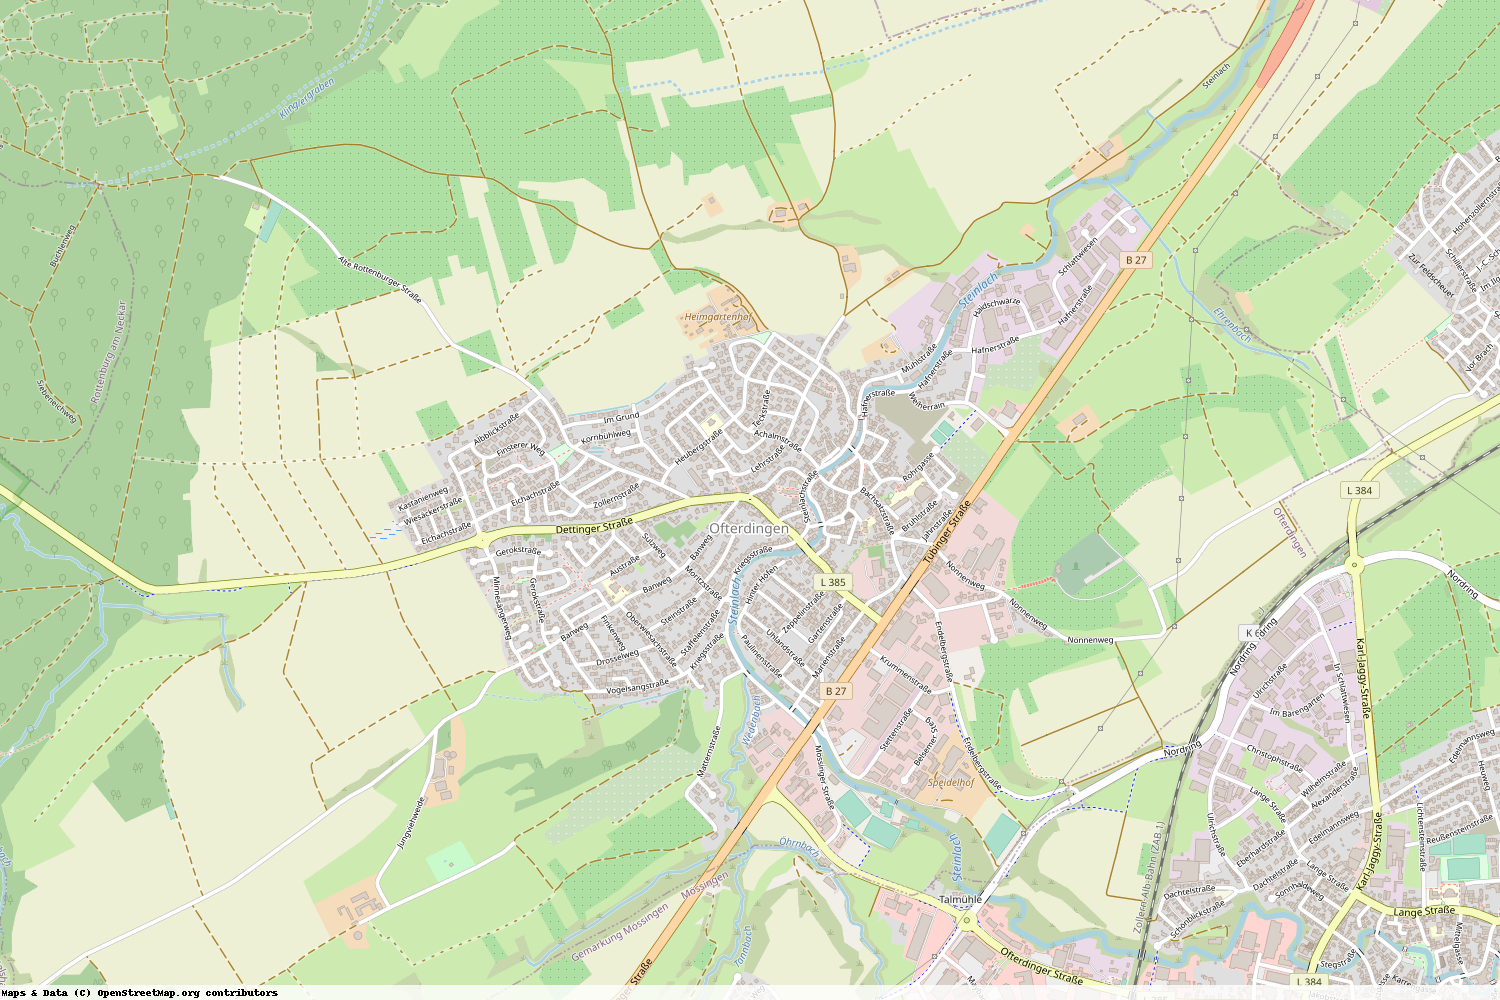 Ist gerade Stromausfall in Baden-Württemberg - Tübingen - Ofterdingen?